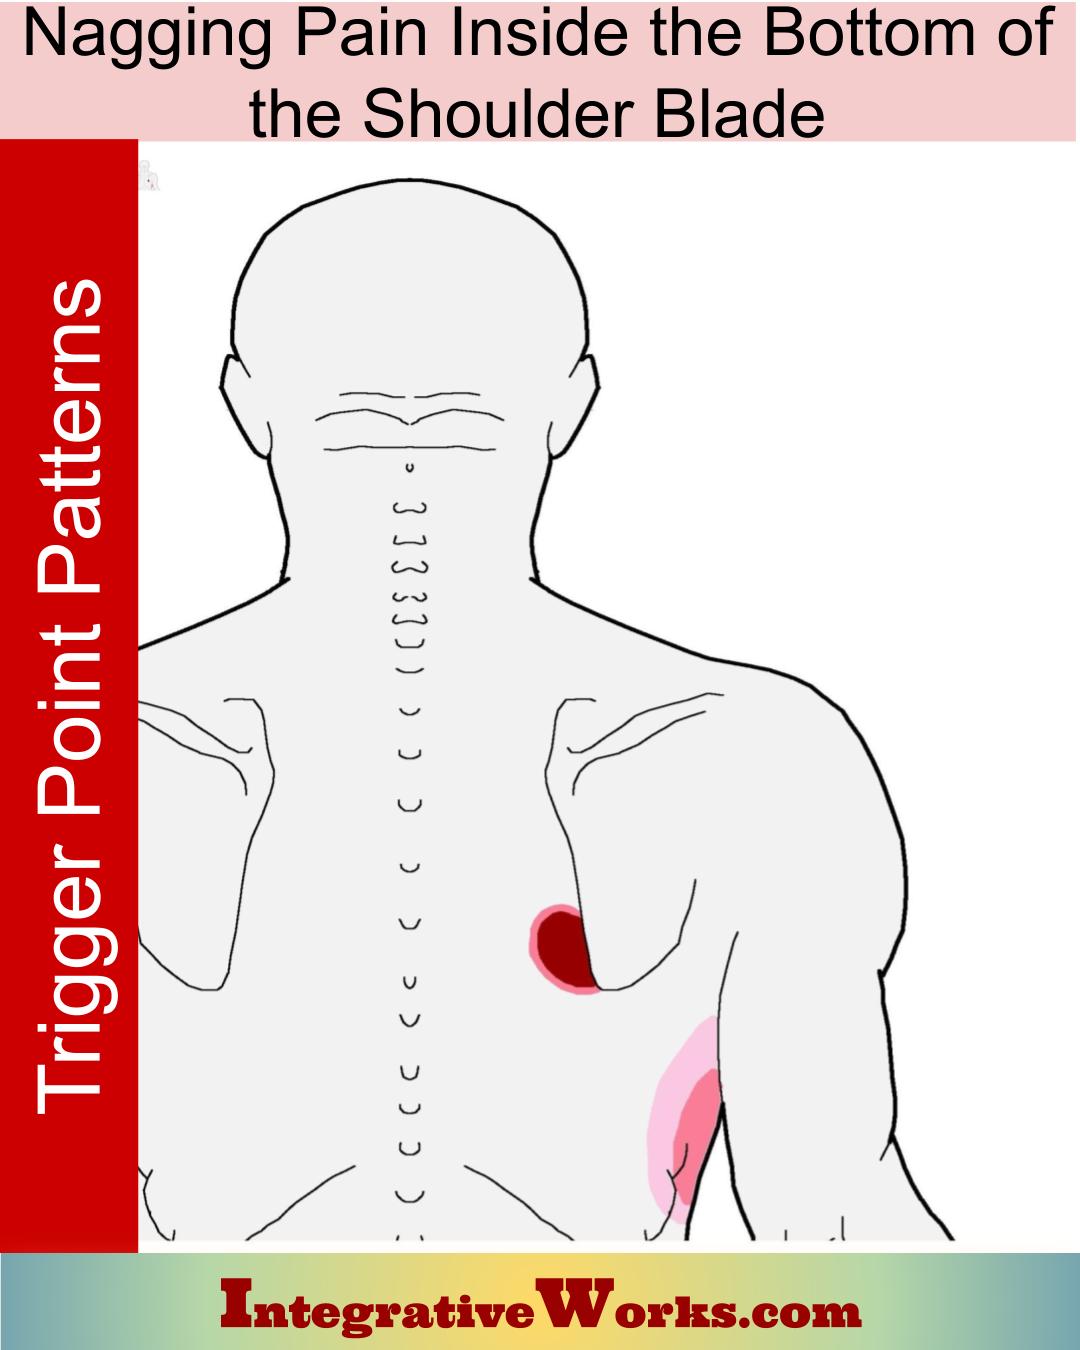 Nagging Pain Inside The Bottom of the Shoulder Blade